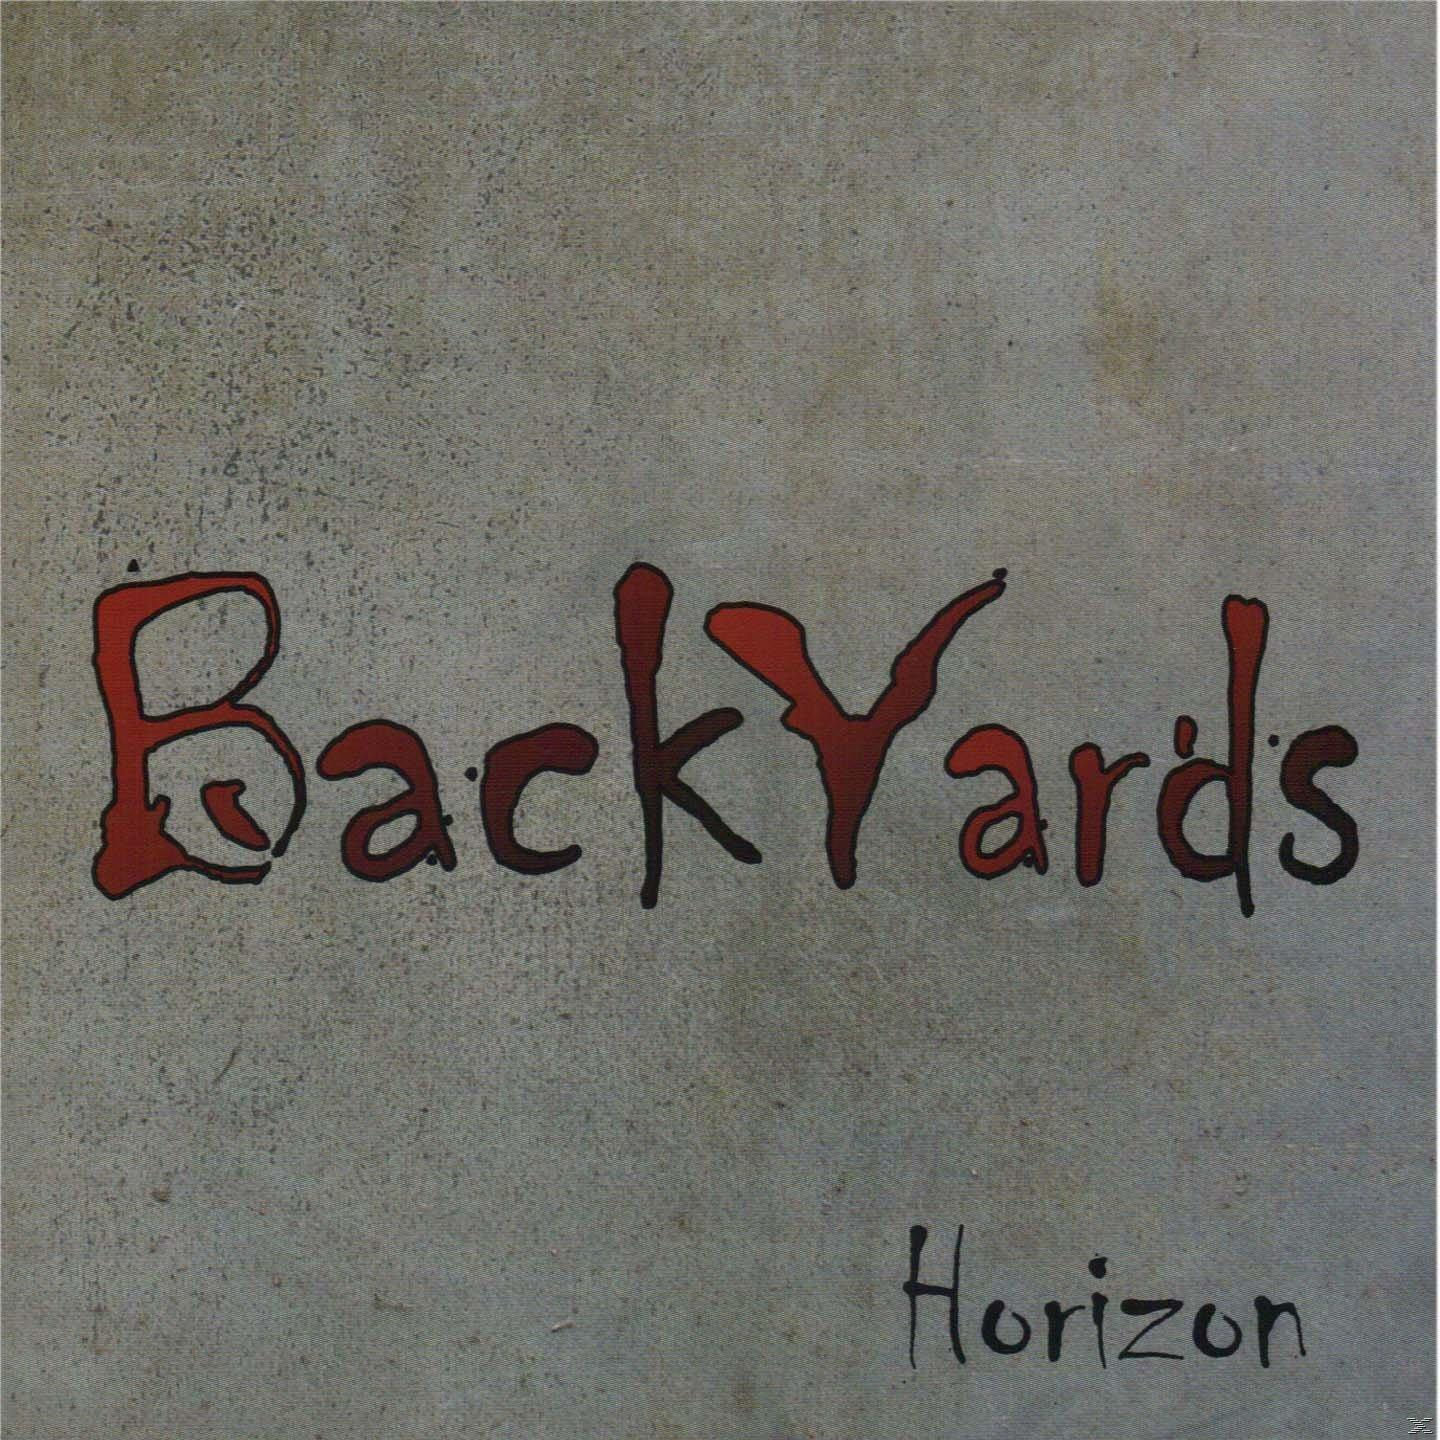 Backyards - (CD) Horizon 